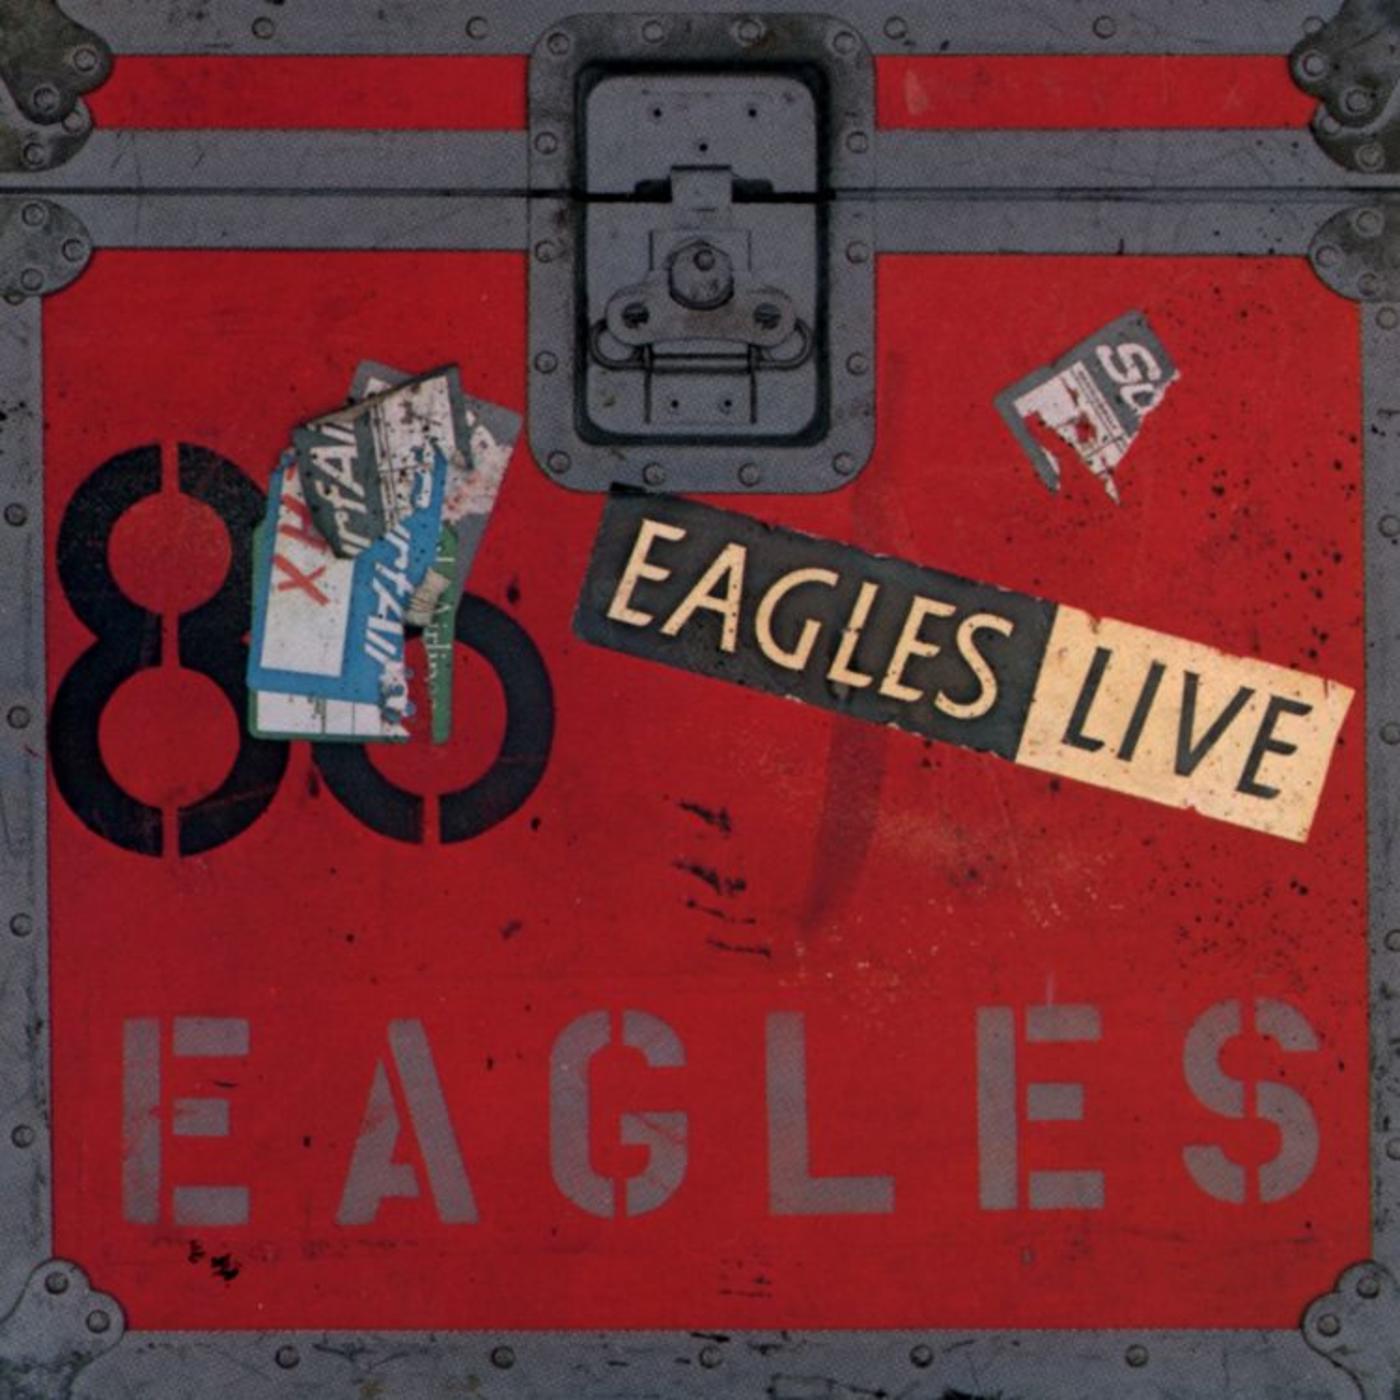 EAGLES - Eagles Live - 2LP - 180g Vinyl